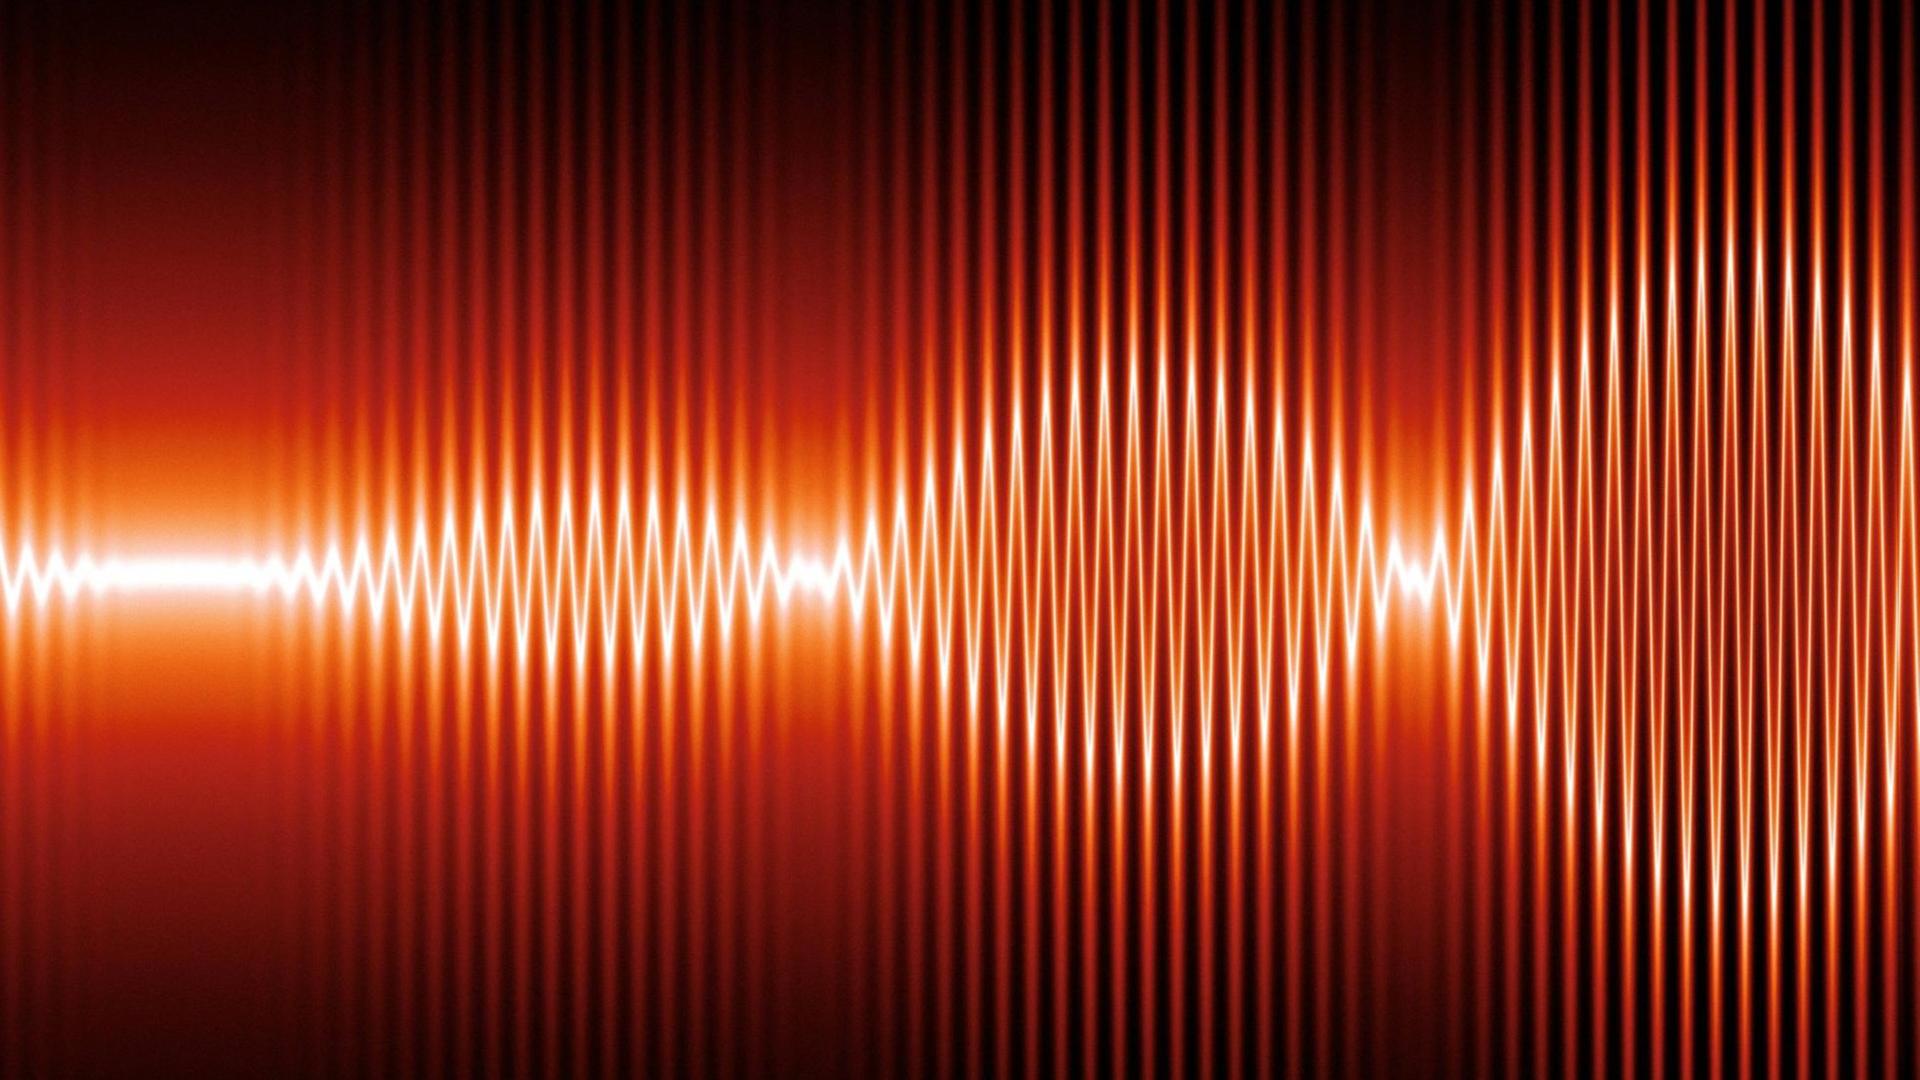 Sound waves, artwork Sound waves, computer artwork. PUBLICATIONxINxGERxSUIxHUNxONLY MEHAUxKULYK/SCIENCExPHOTOxLIBRARY F003/0083 Sound Waves Artwork Sound Waves Computer Artwork PUBLICATIONxINxGERxSUIxHUNxONLY MEHAUxKULYK SCIENCExPHOTOxLIBRARY F003